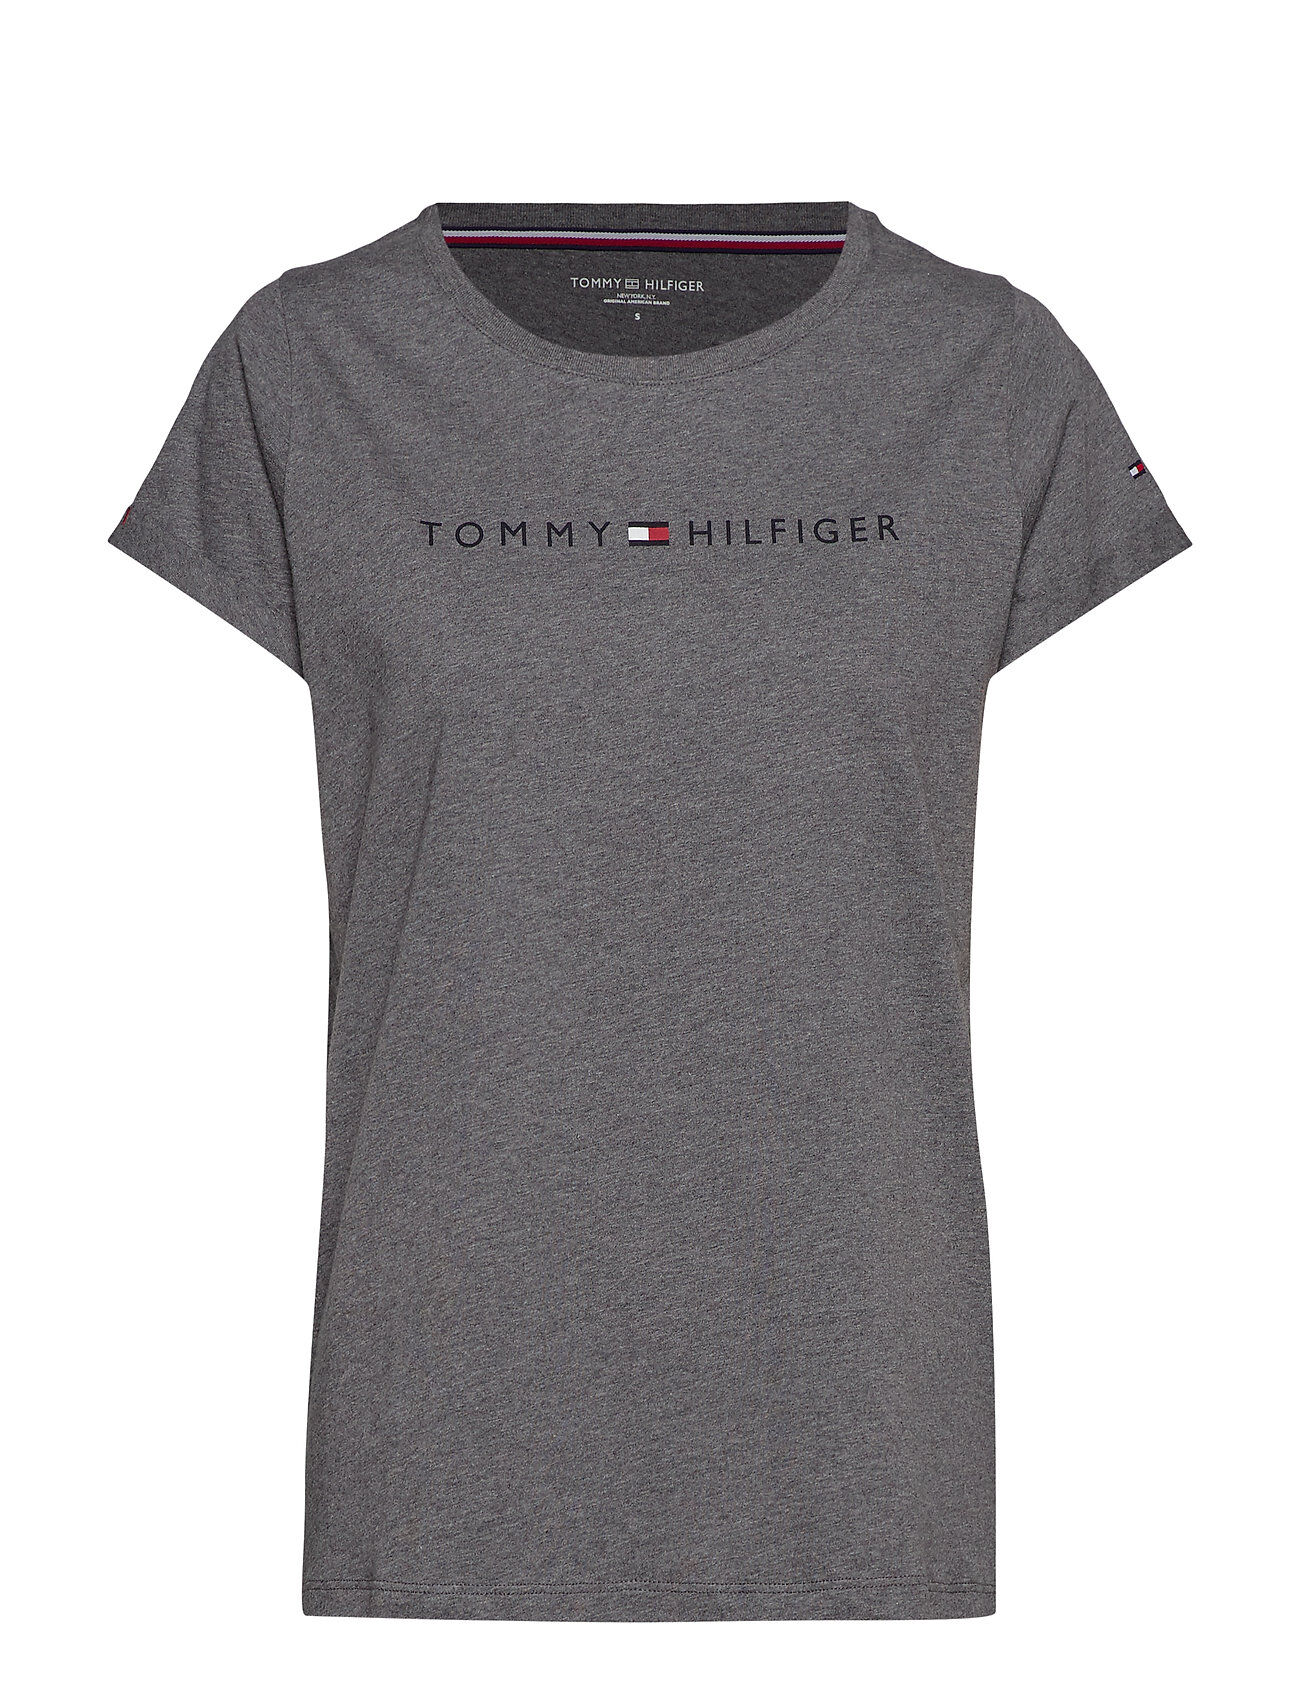 Tommy Hilfiger Rn Tee Ss Logo T-shirts & Tops Short-sleeved Grå Tommy Hilfiger